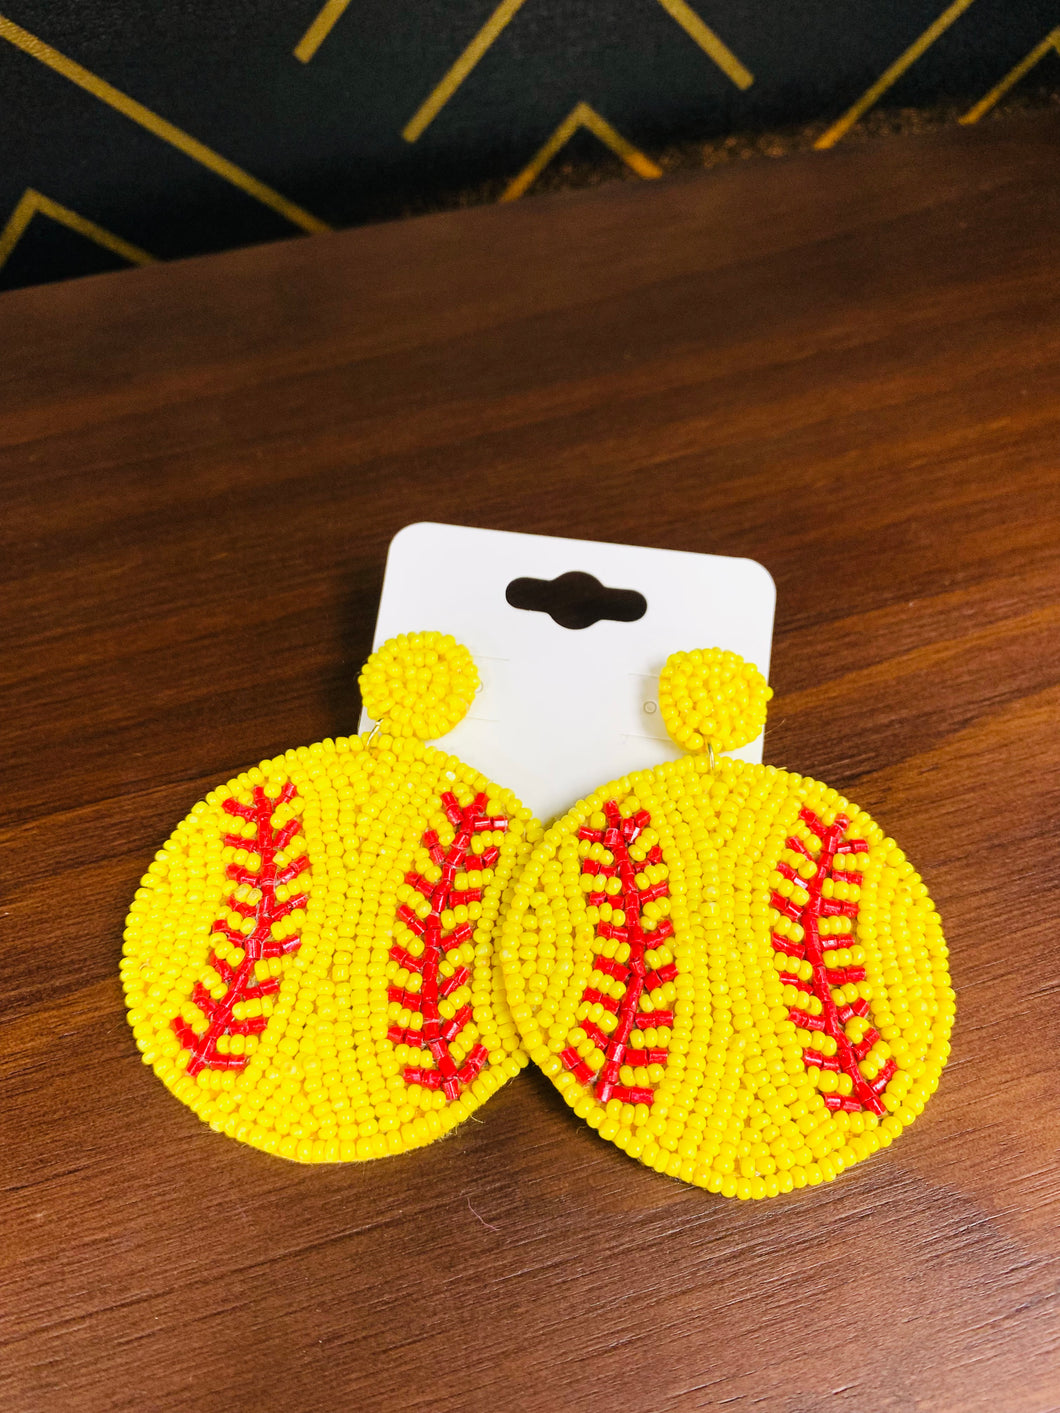 Softball Beaded Earrings - Southern Grace Shoppe